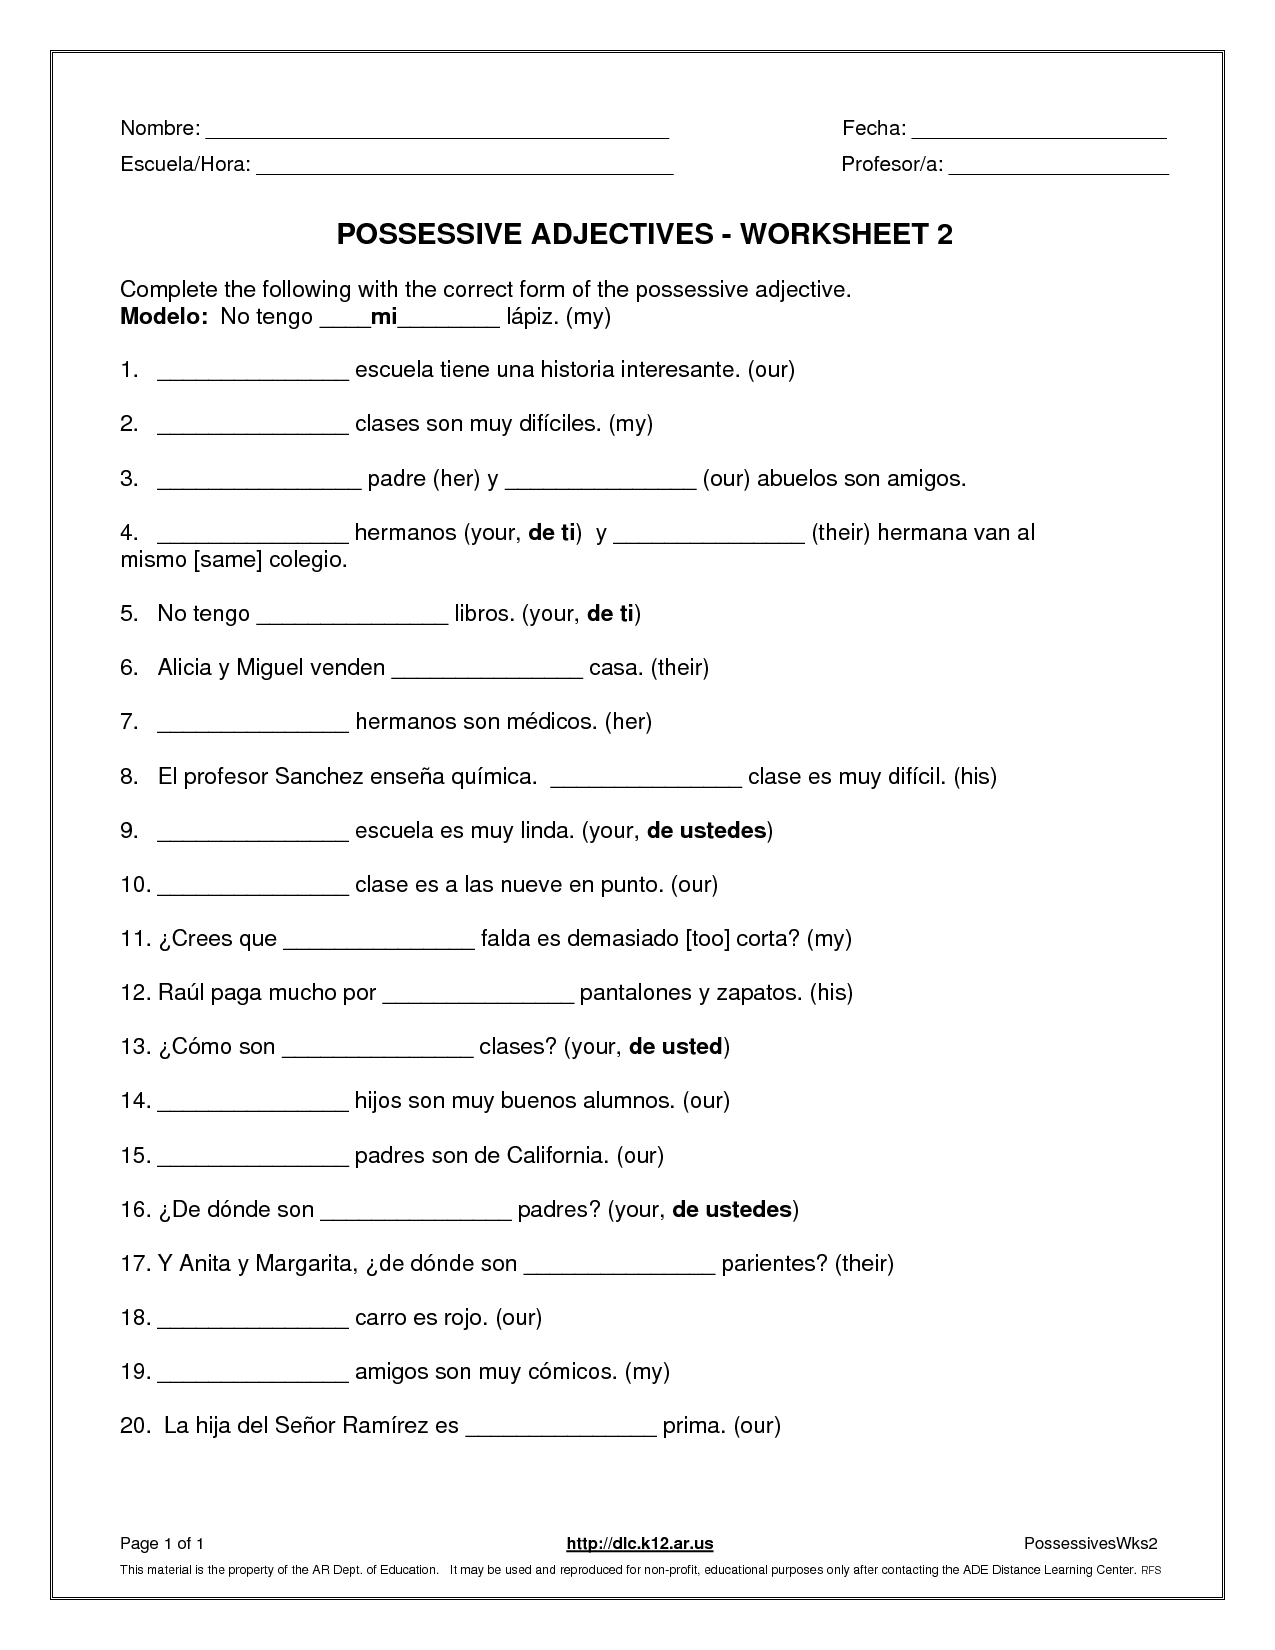 14-best-images-of-spanish-pronouns-worksheet-subject-pronouns-worksheets-spanish-subject